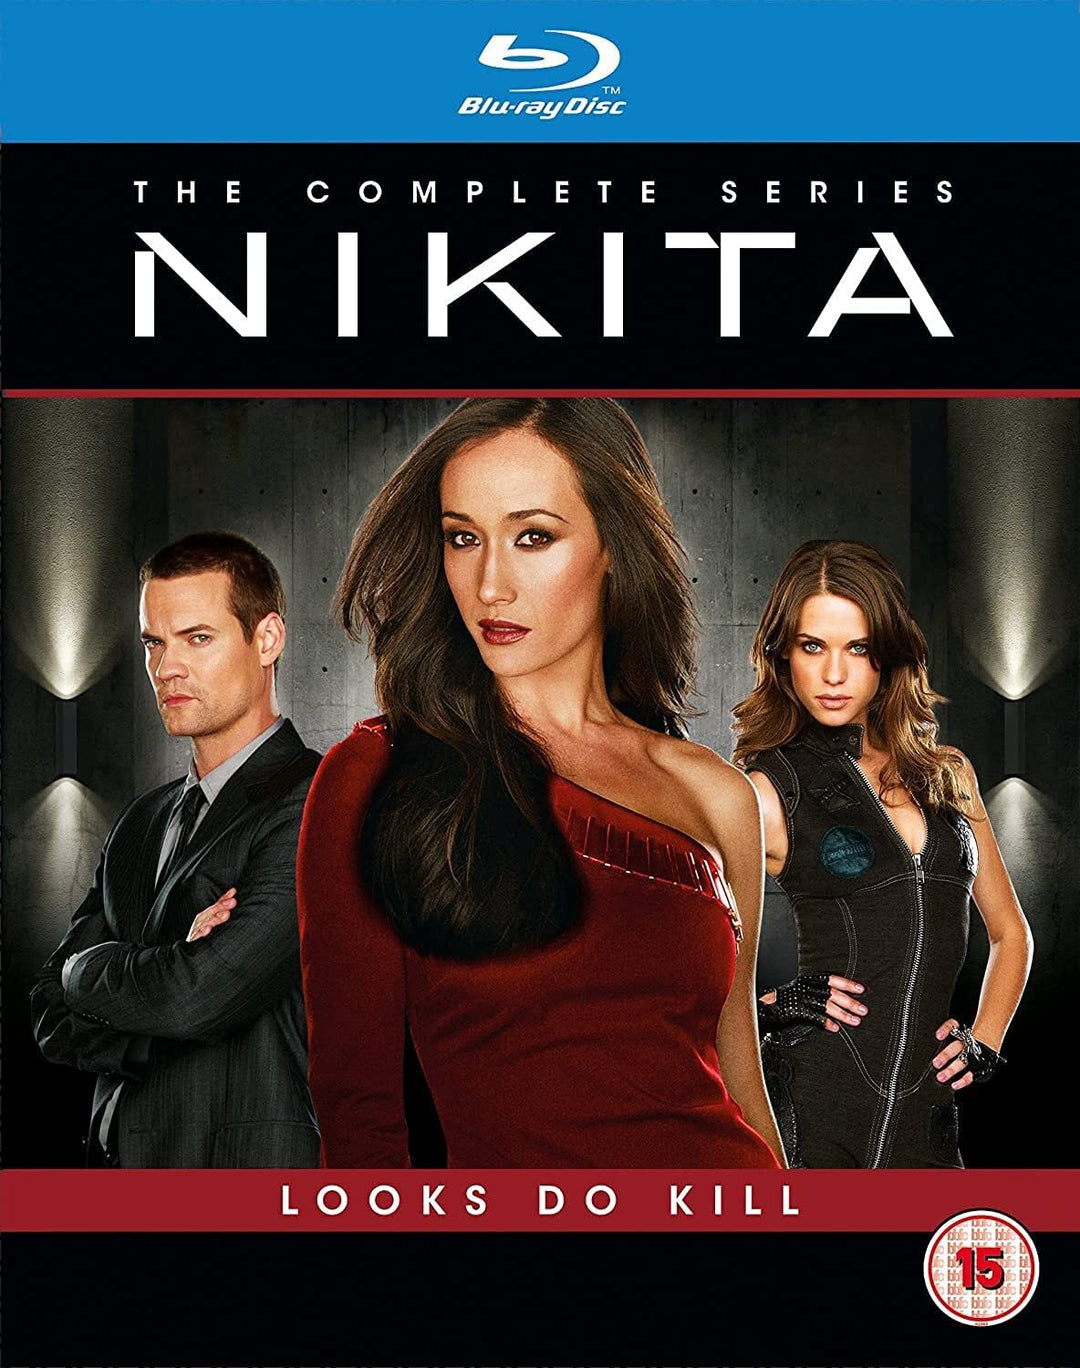 Nikita - La série complète [Blu-ray] [2014] [Région gratuite]